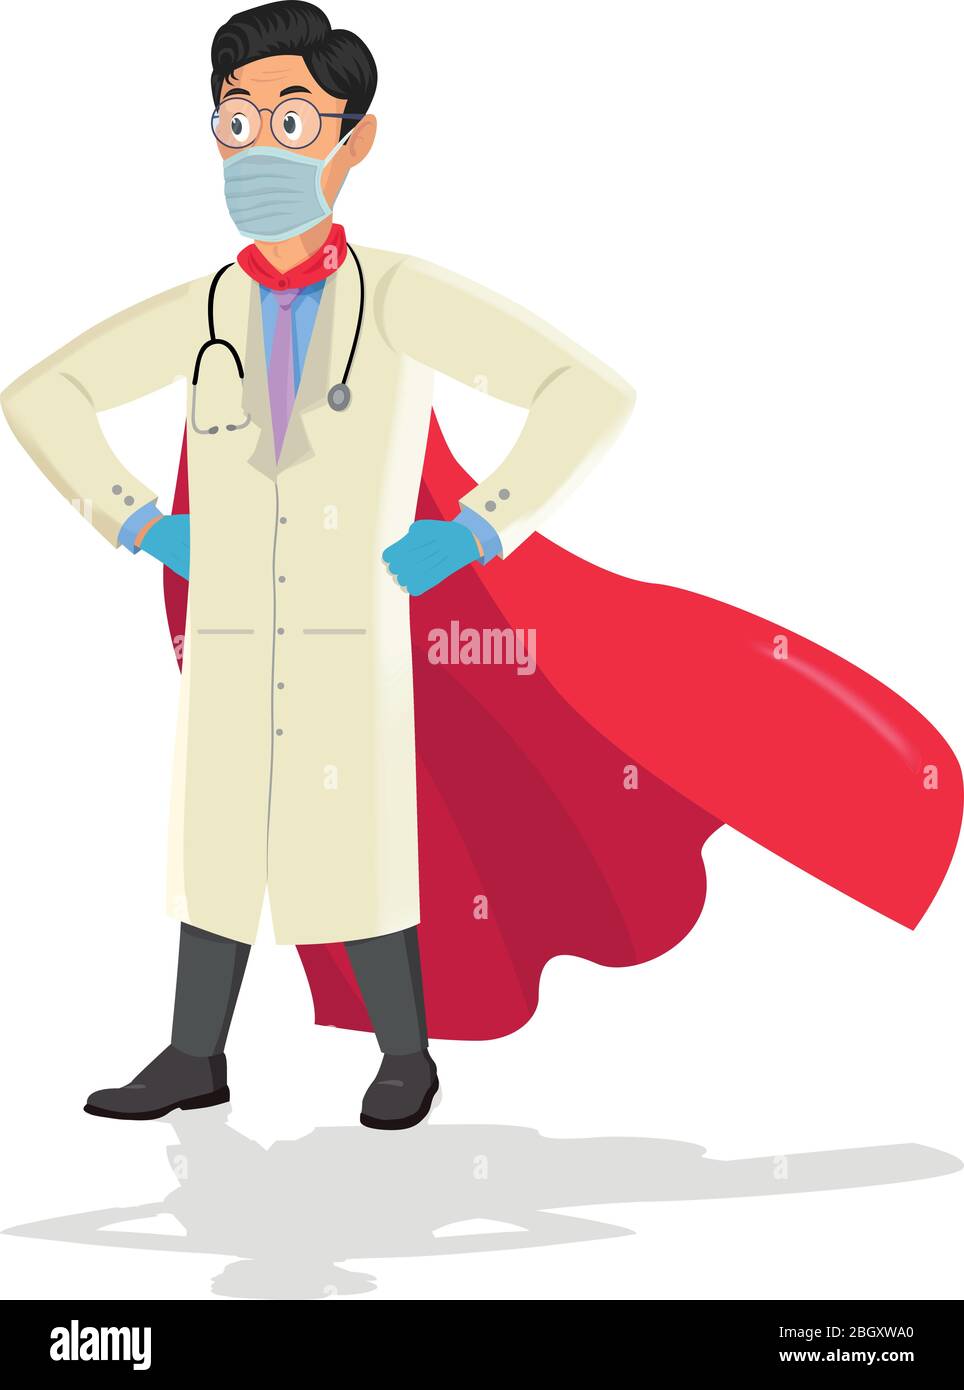 Cartoon doctor with a superhero cape. Stock Vector